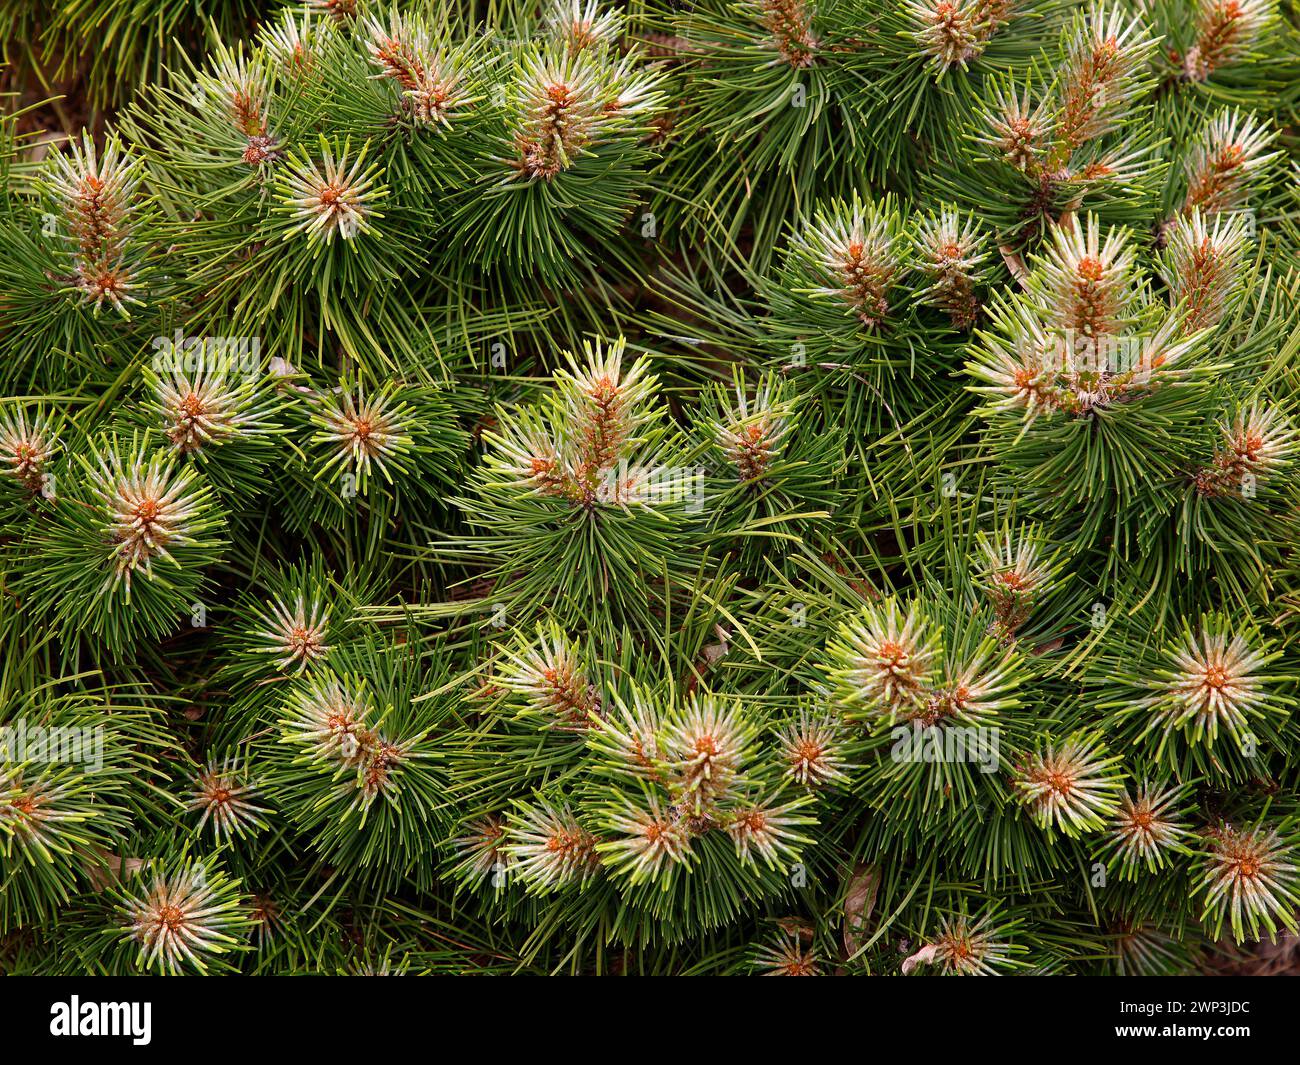 Closeup of the green foliage and new growth of the European black pine pinus nigra keightley broom. Stock Photo